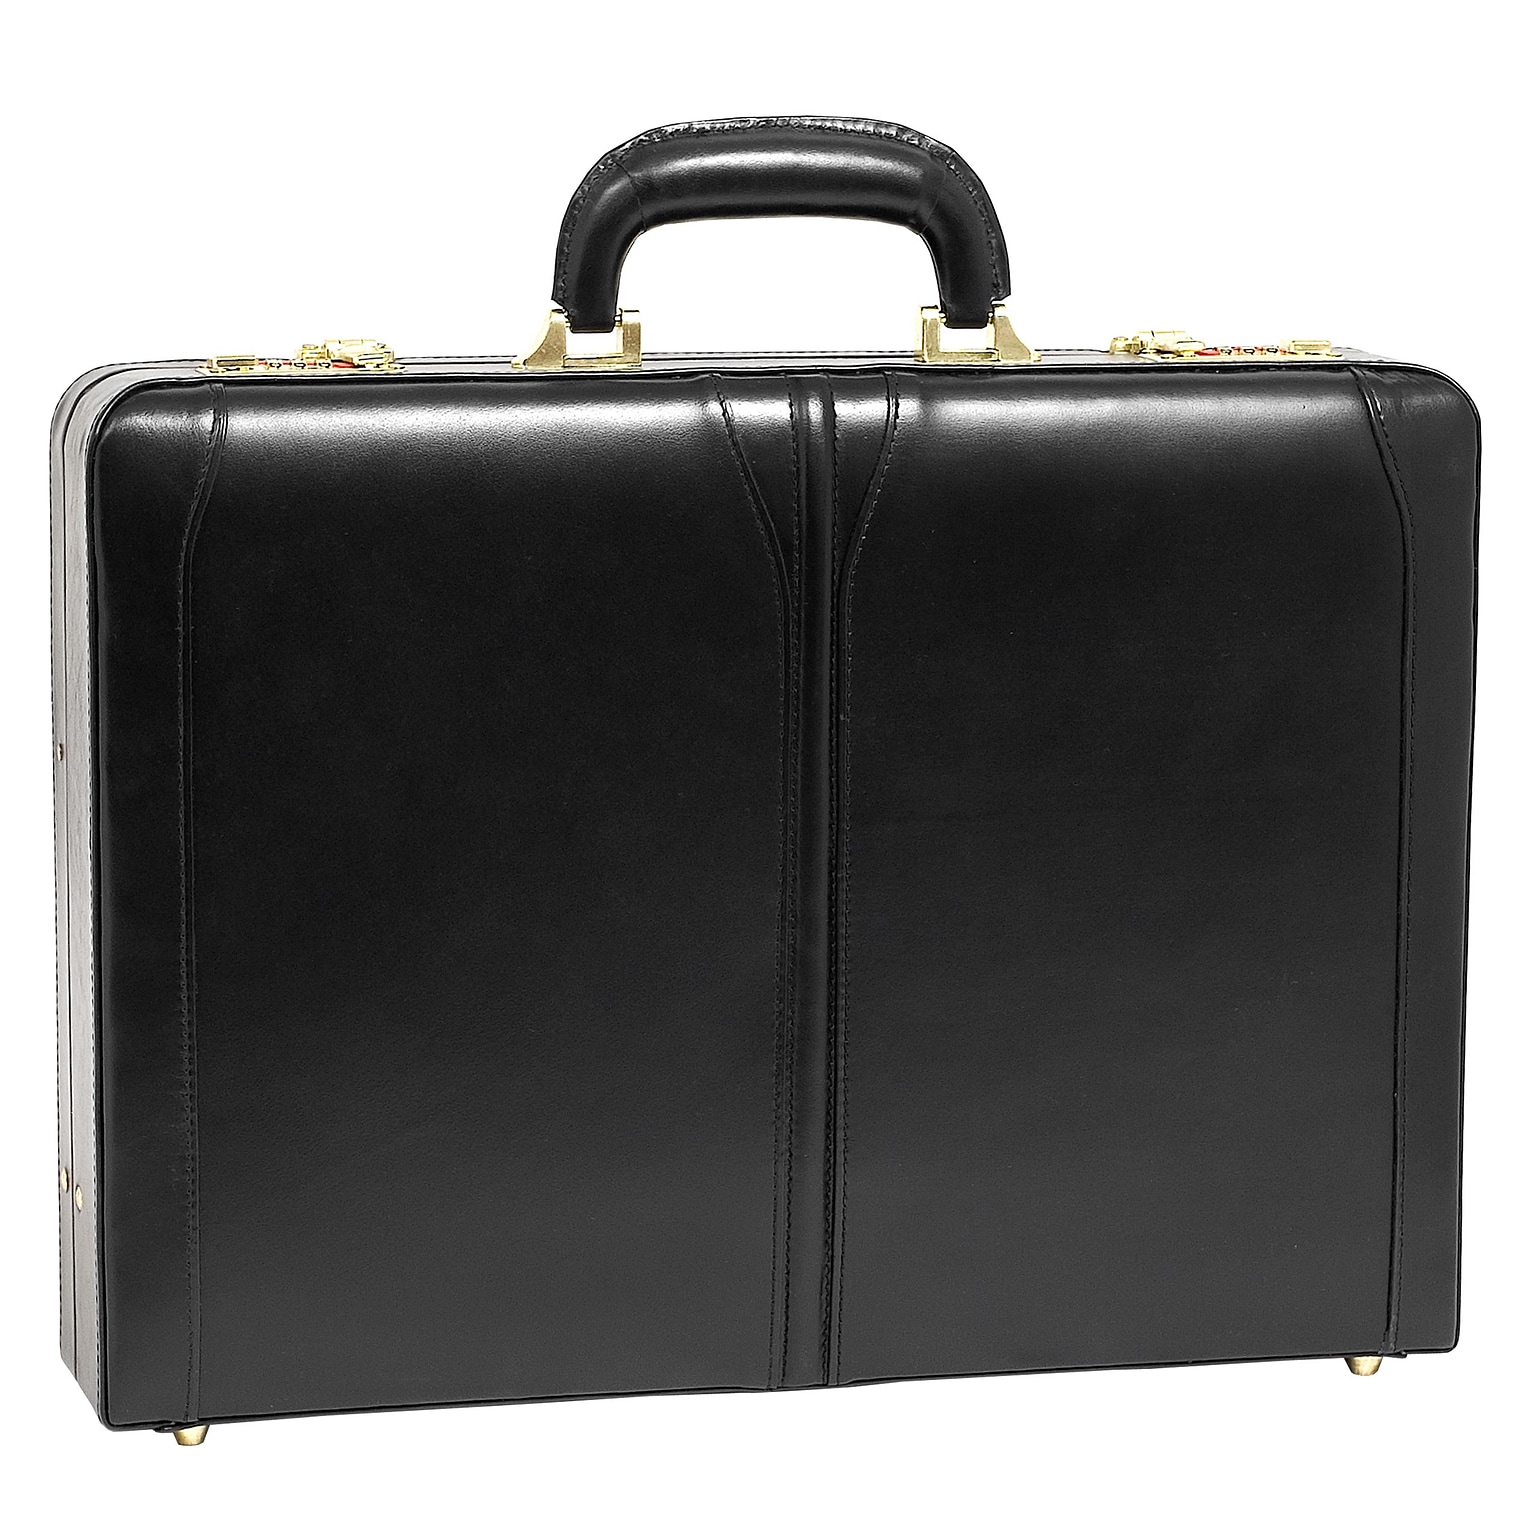 McKlein V Series, LAWSON, Top Grain Cowhide Leather,Attaché Briefcase, Black (80455)